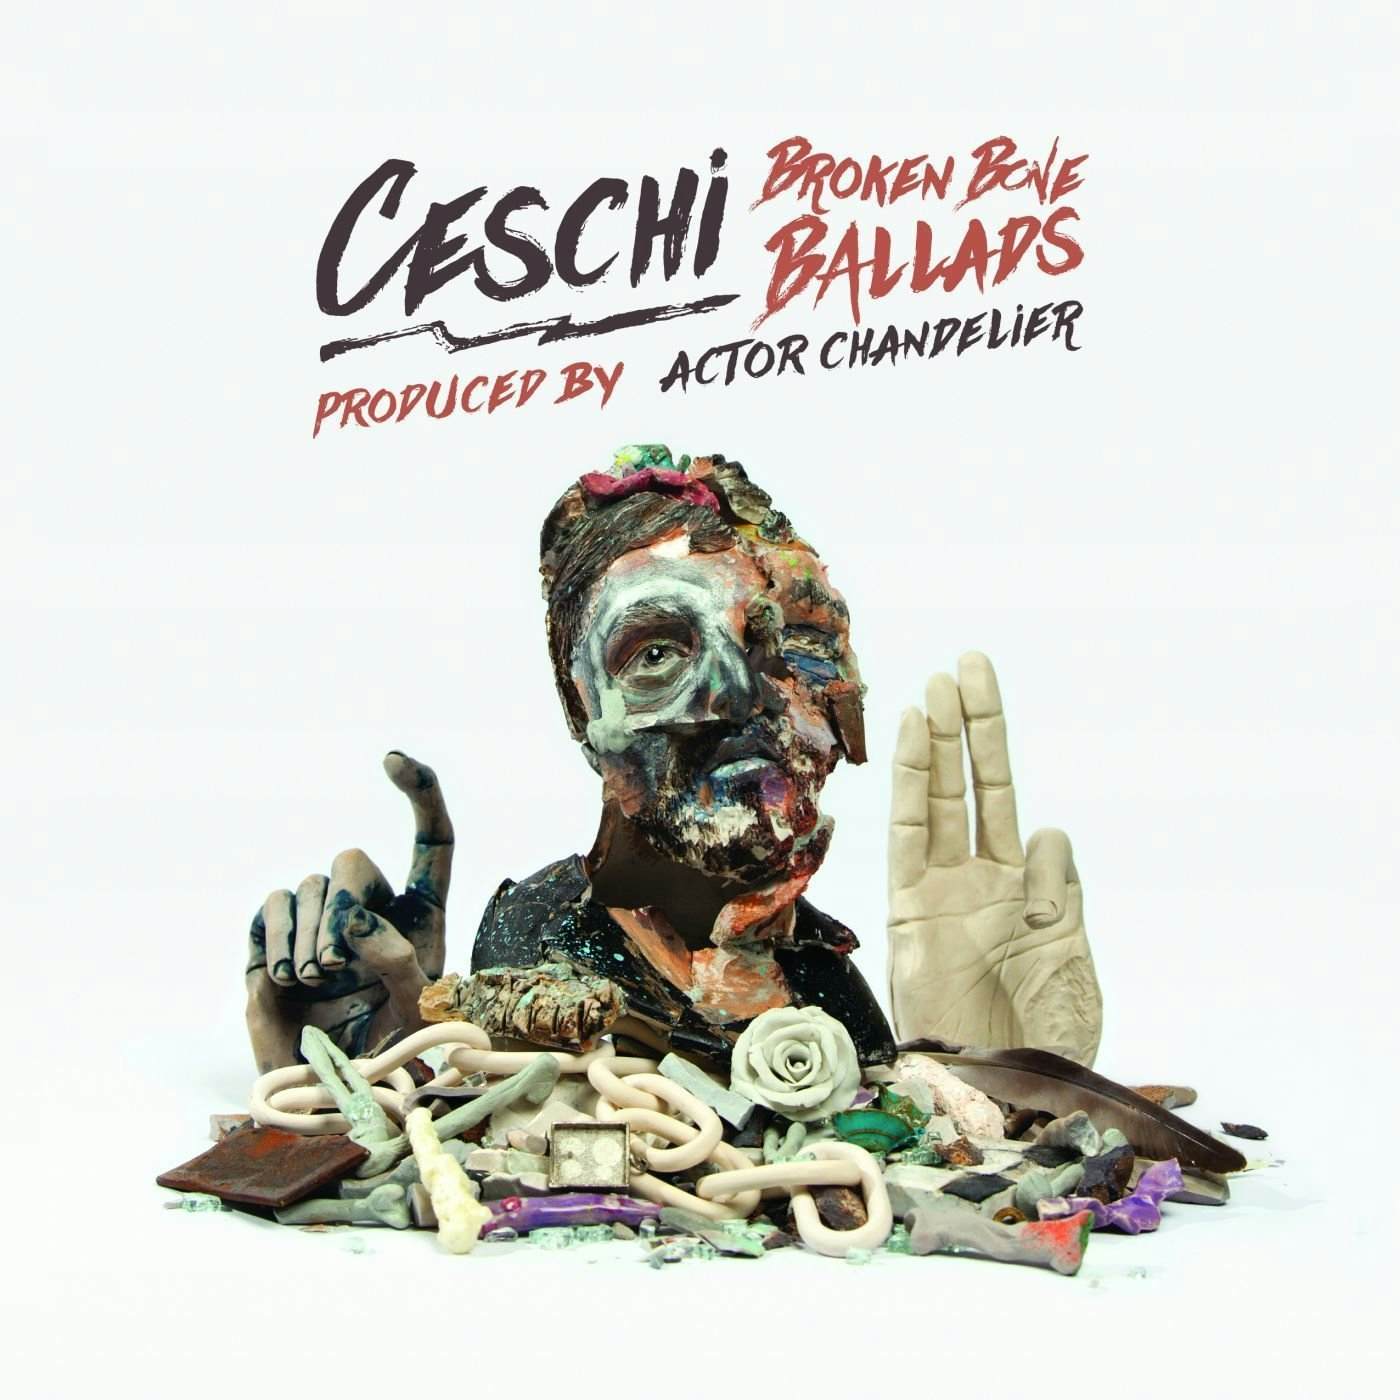 Ceschi Broken Bone Ballads Vinyl Record